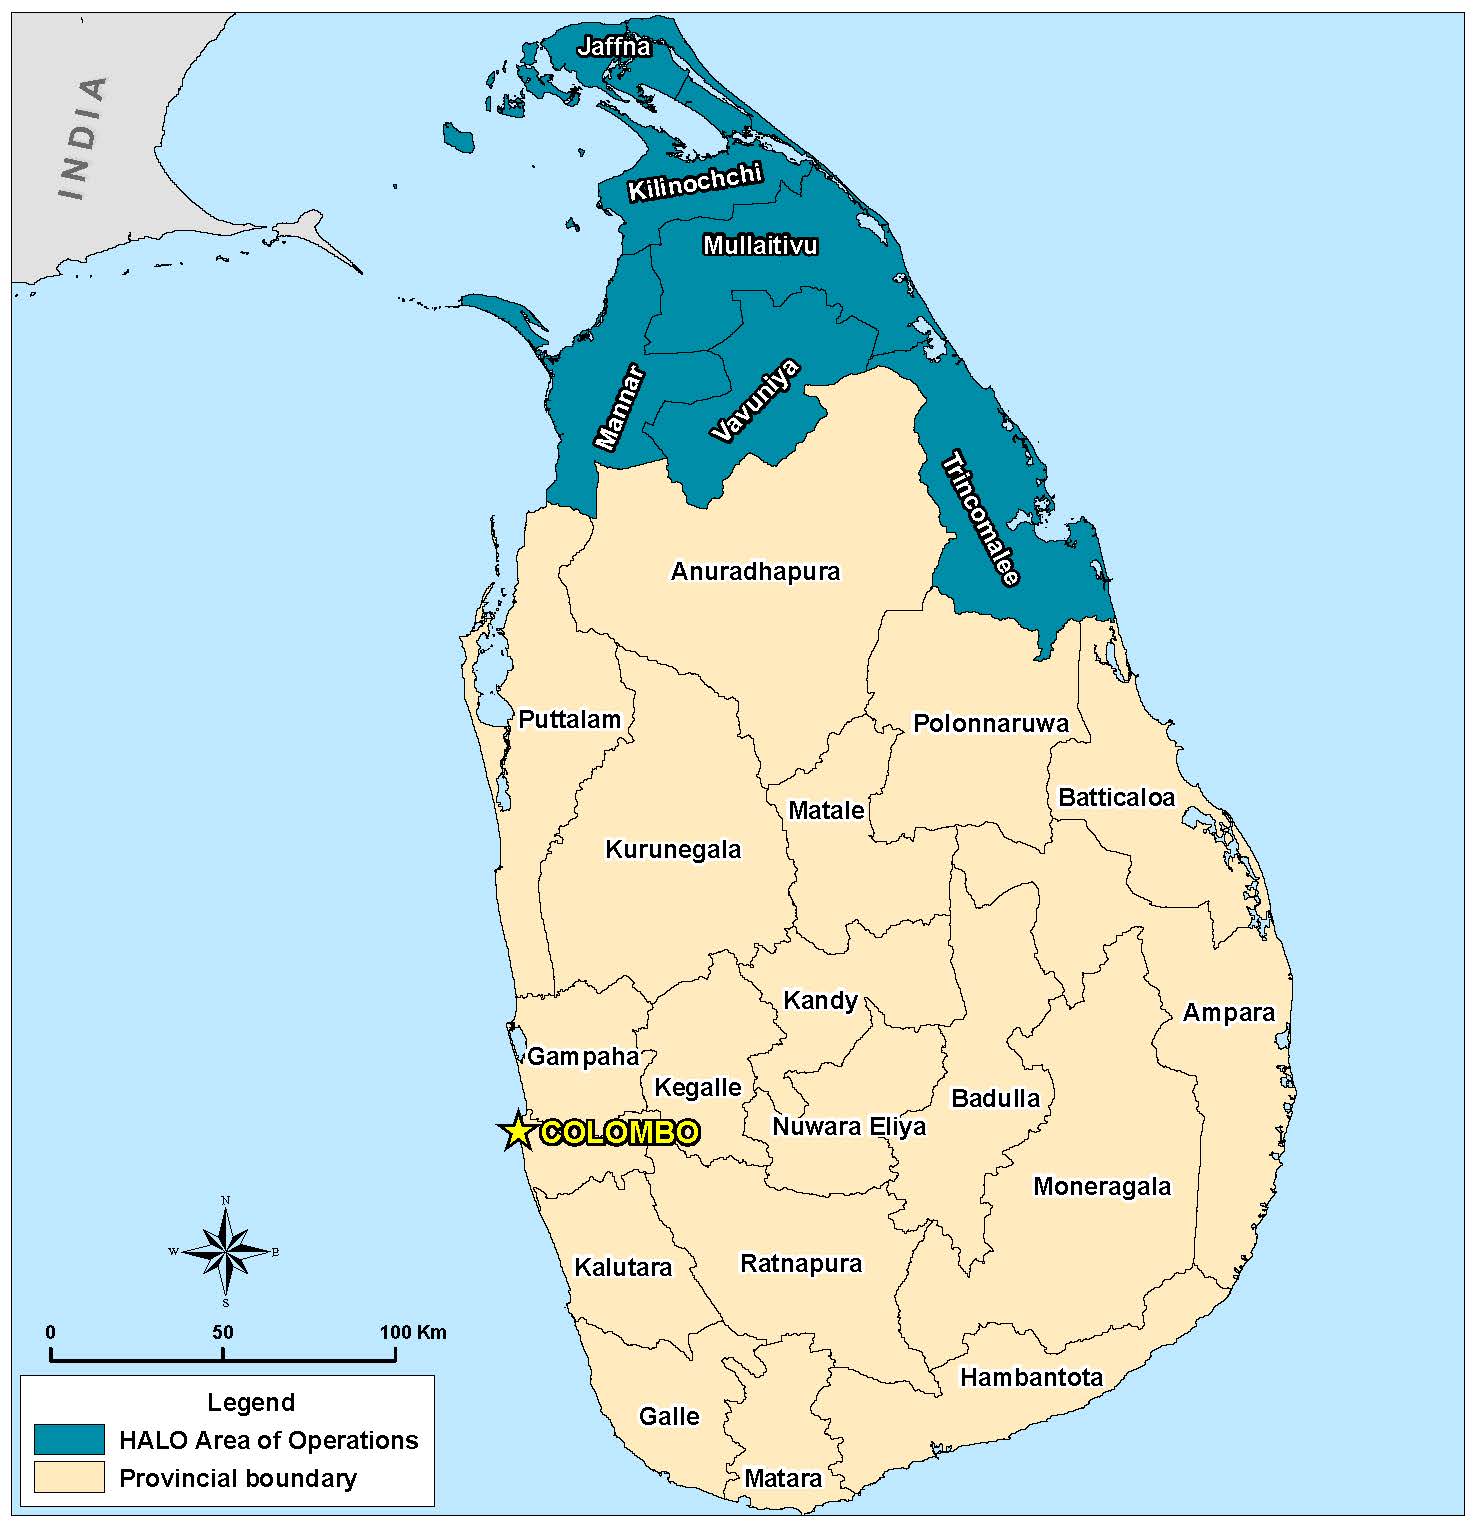 Sri Lanka Tourism Strategic Plan 2017 - 2020